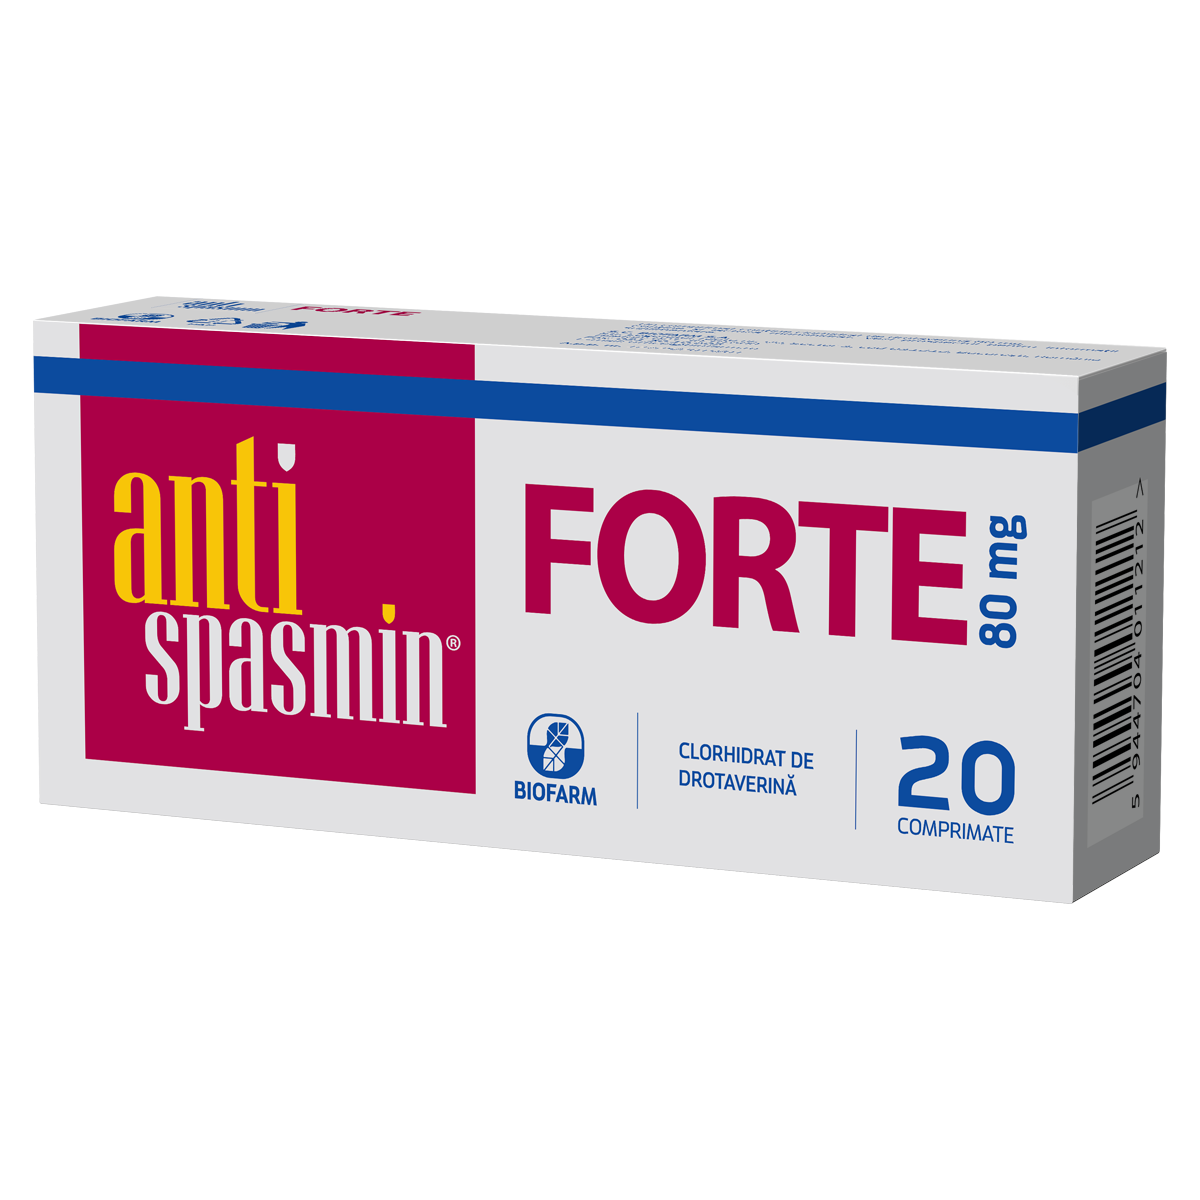 Antispasmin Forte 80 mg, Biofarm, 20 cpr